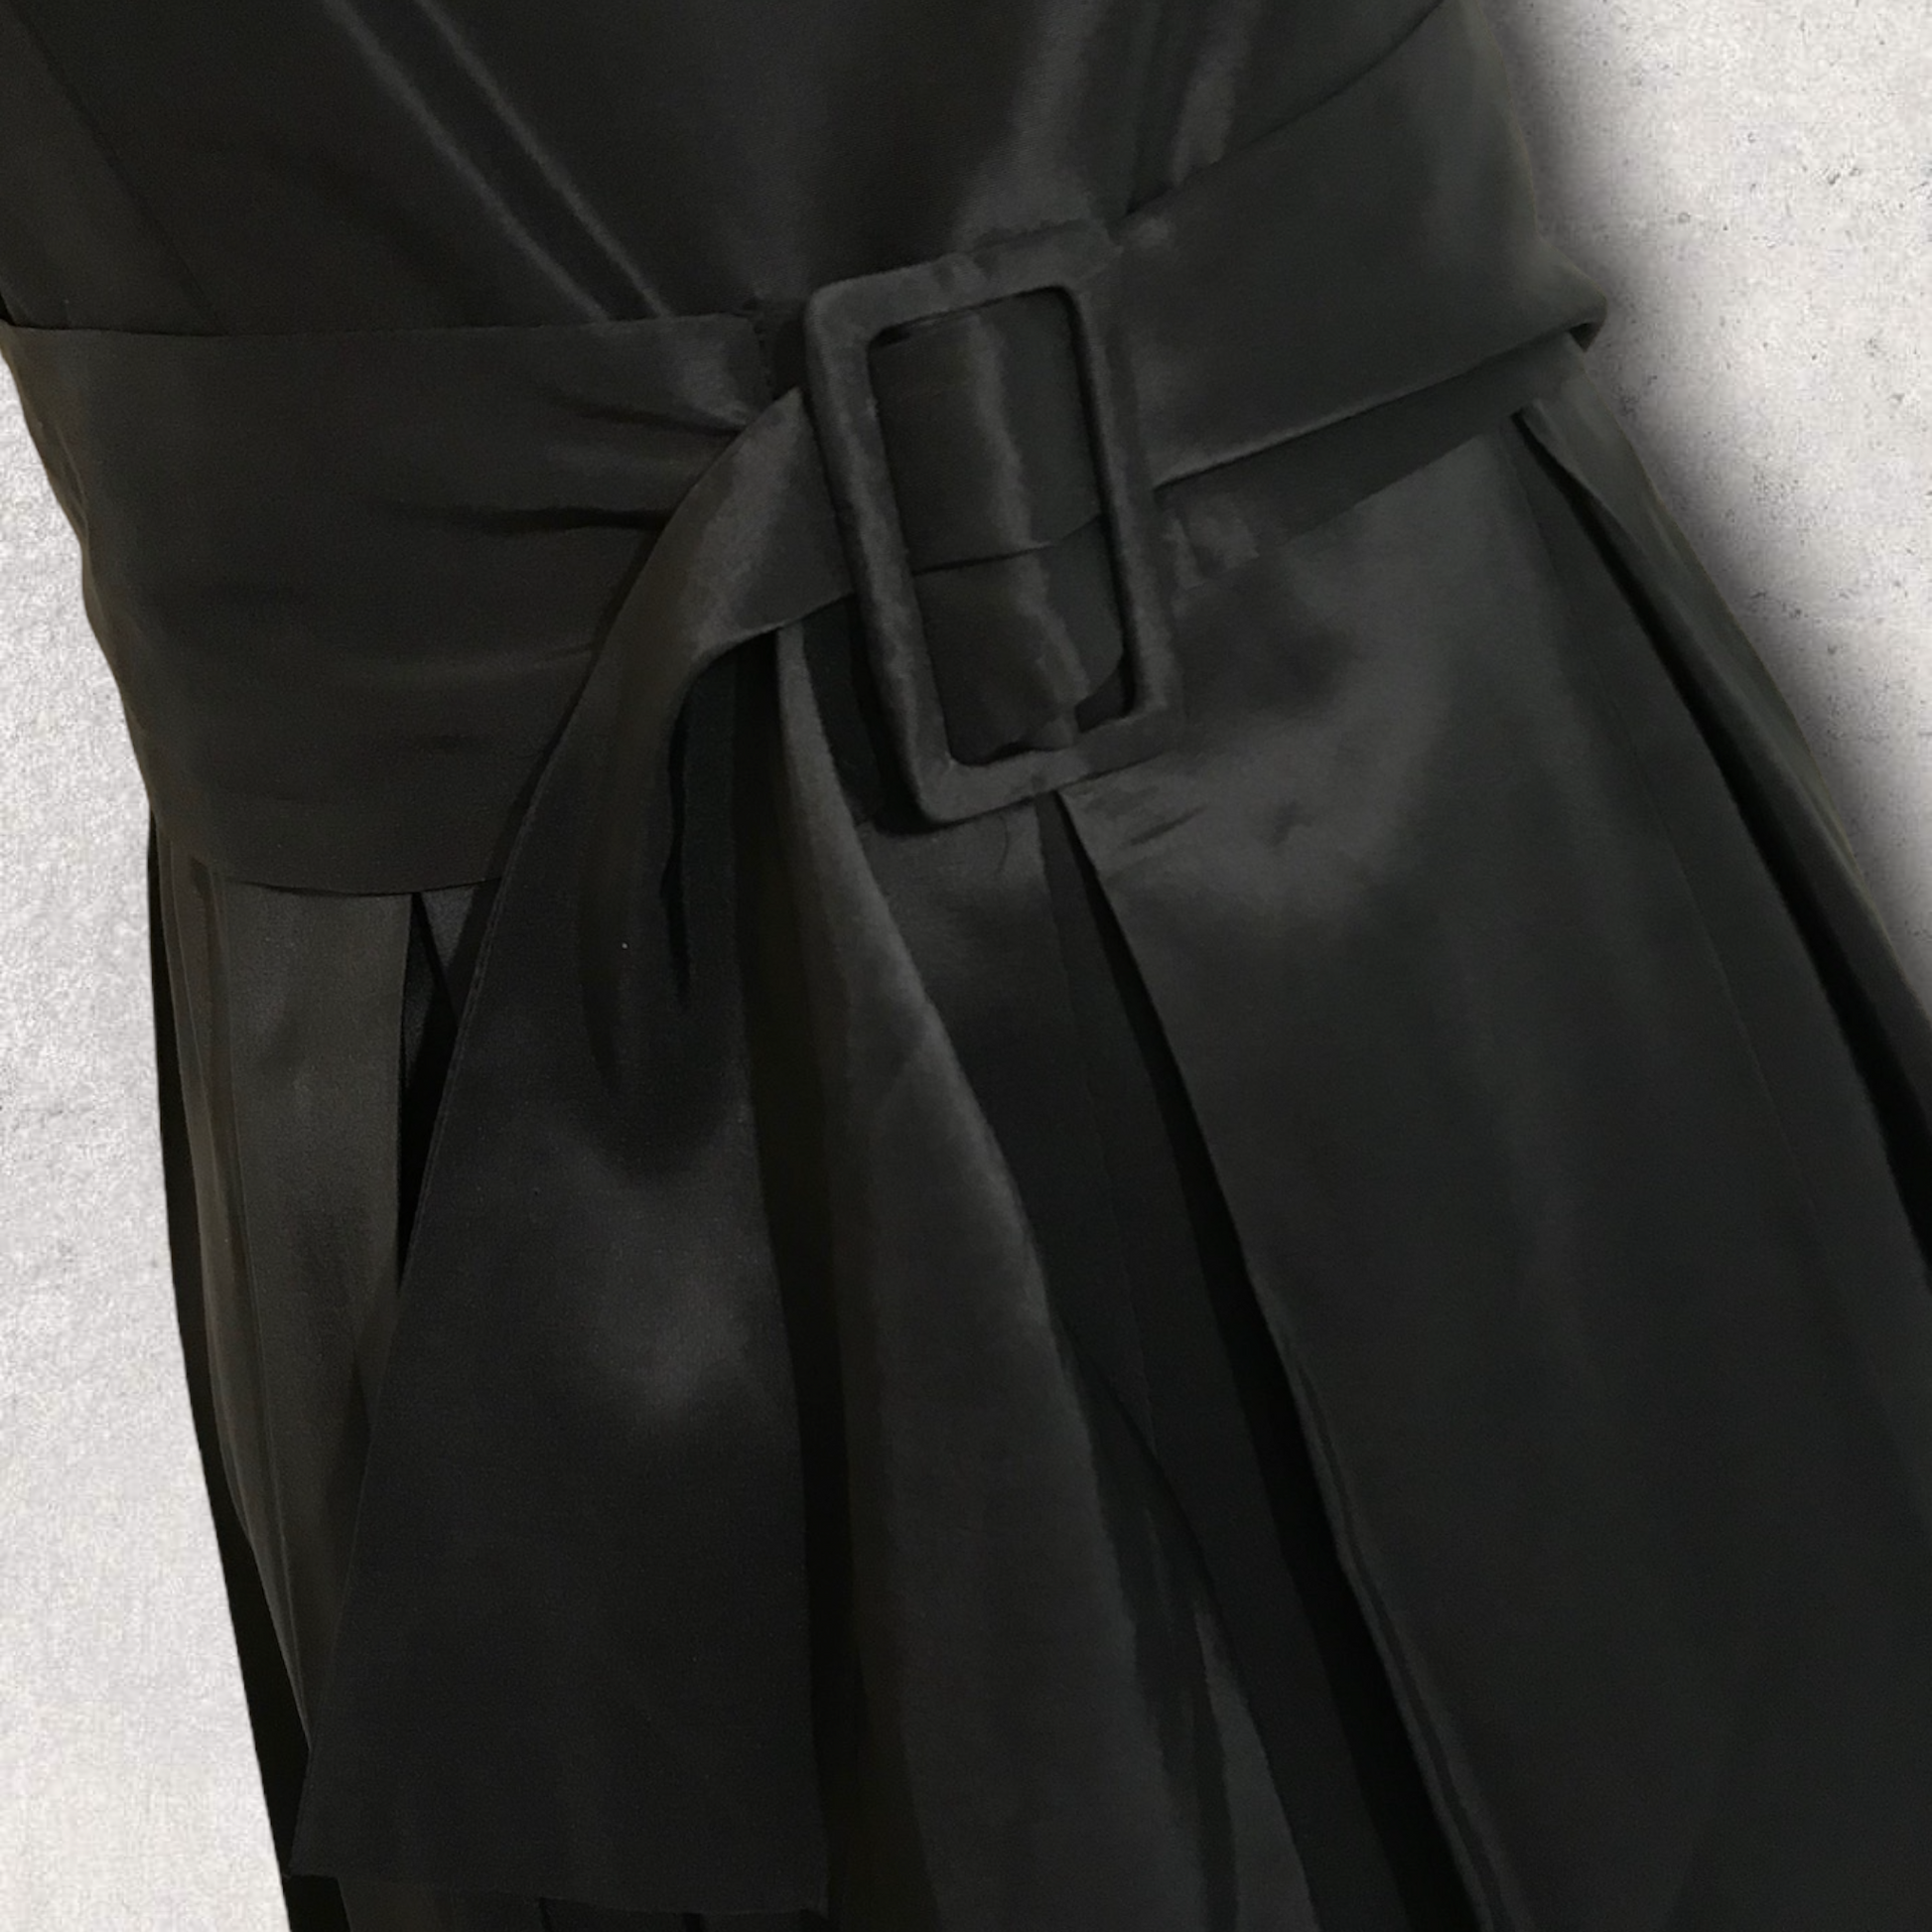 Renato Nucci Black Silk Mix Fit & Evening Dress UK 10 US 6 EU 38 Timeless Fashions